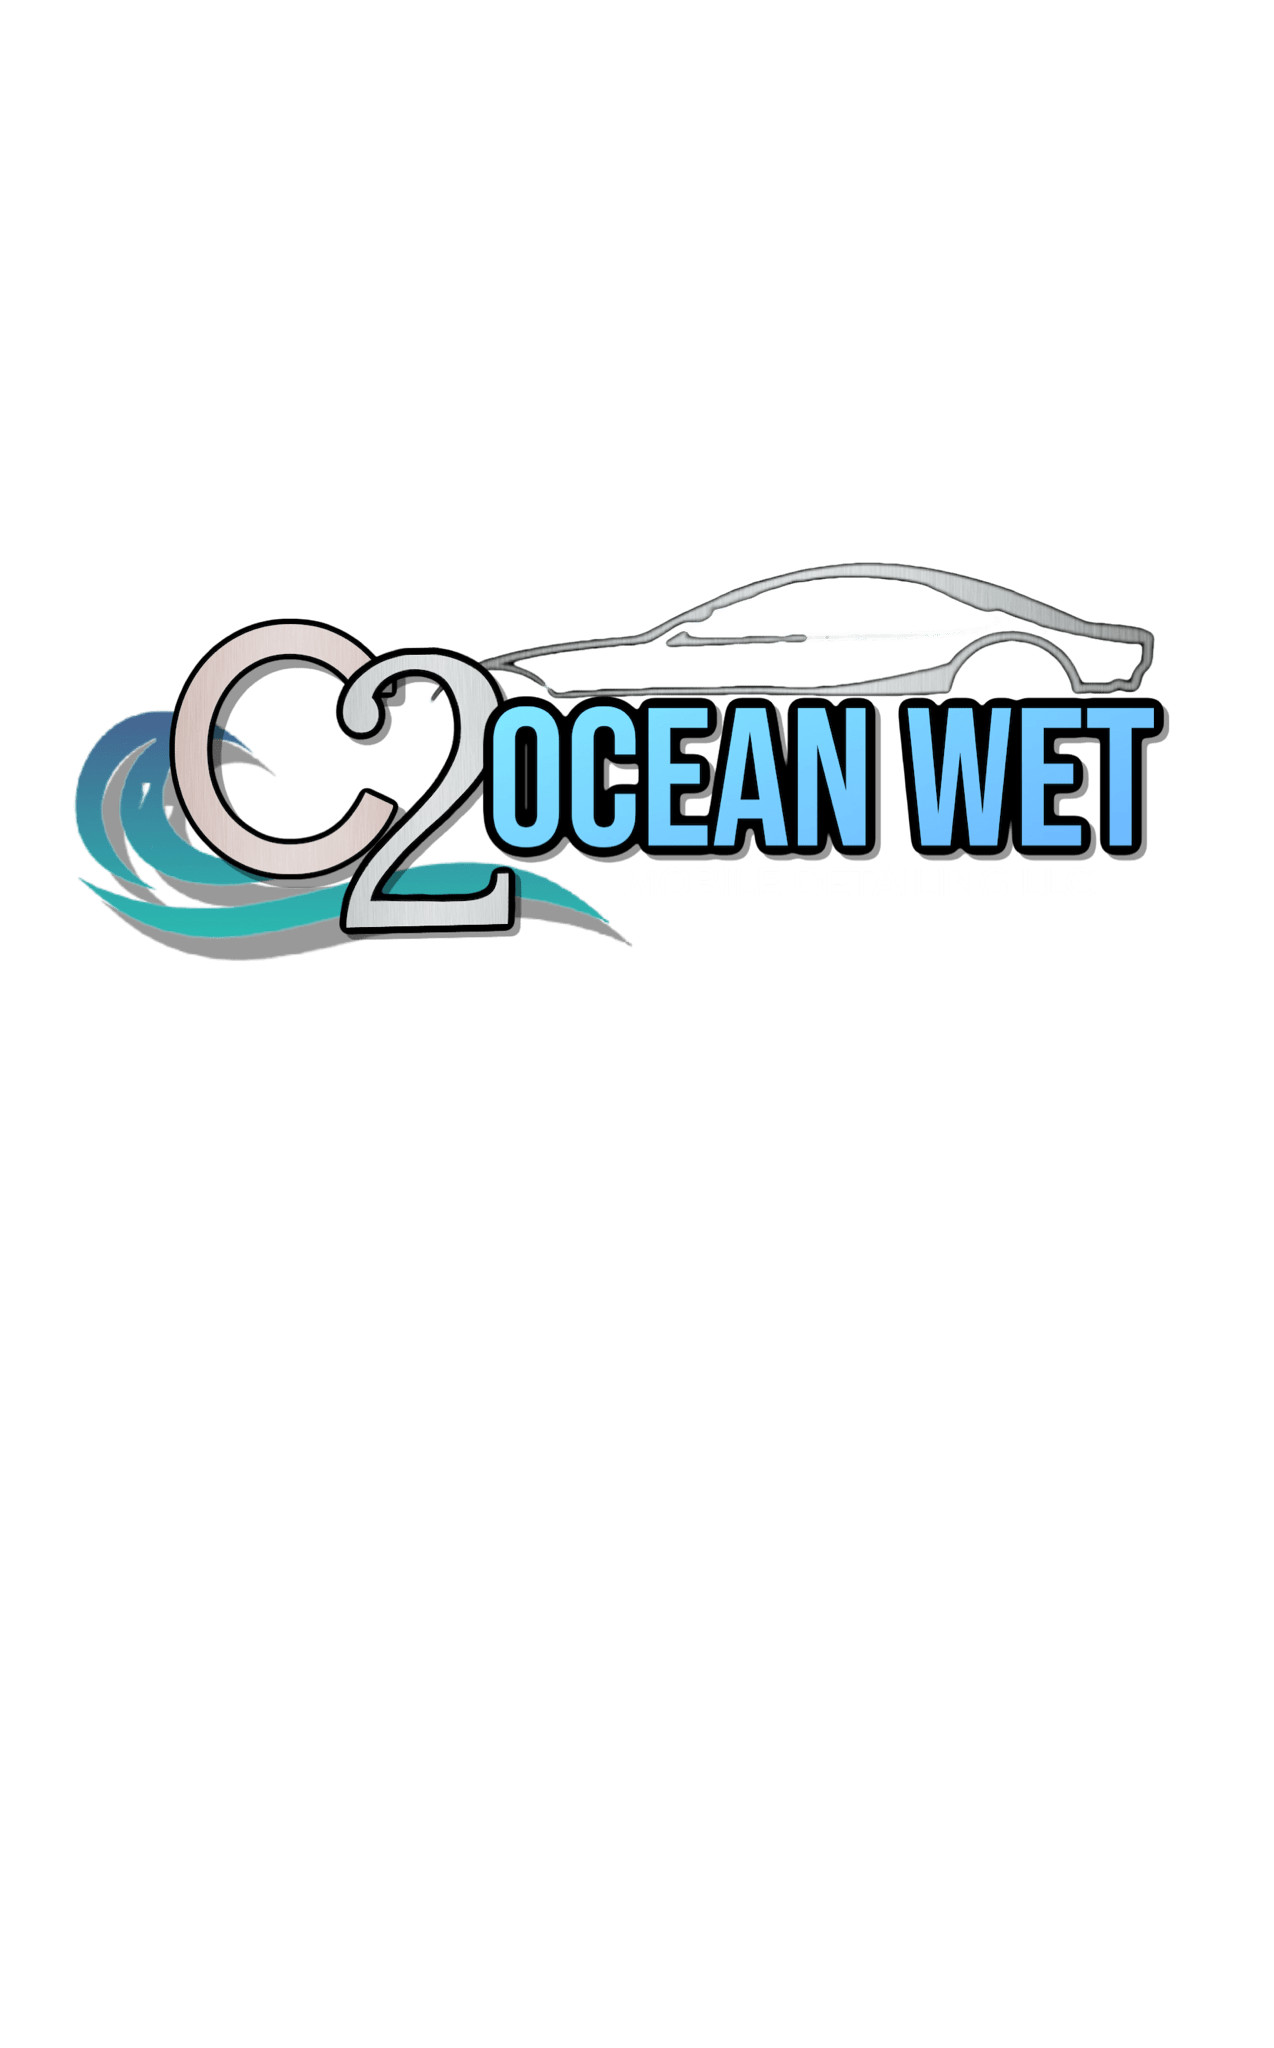 C2 Ocean Wet Mobile Detailing, LLC.